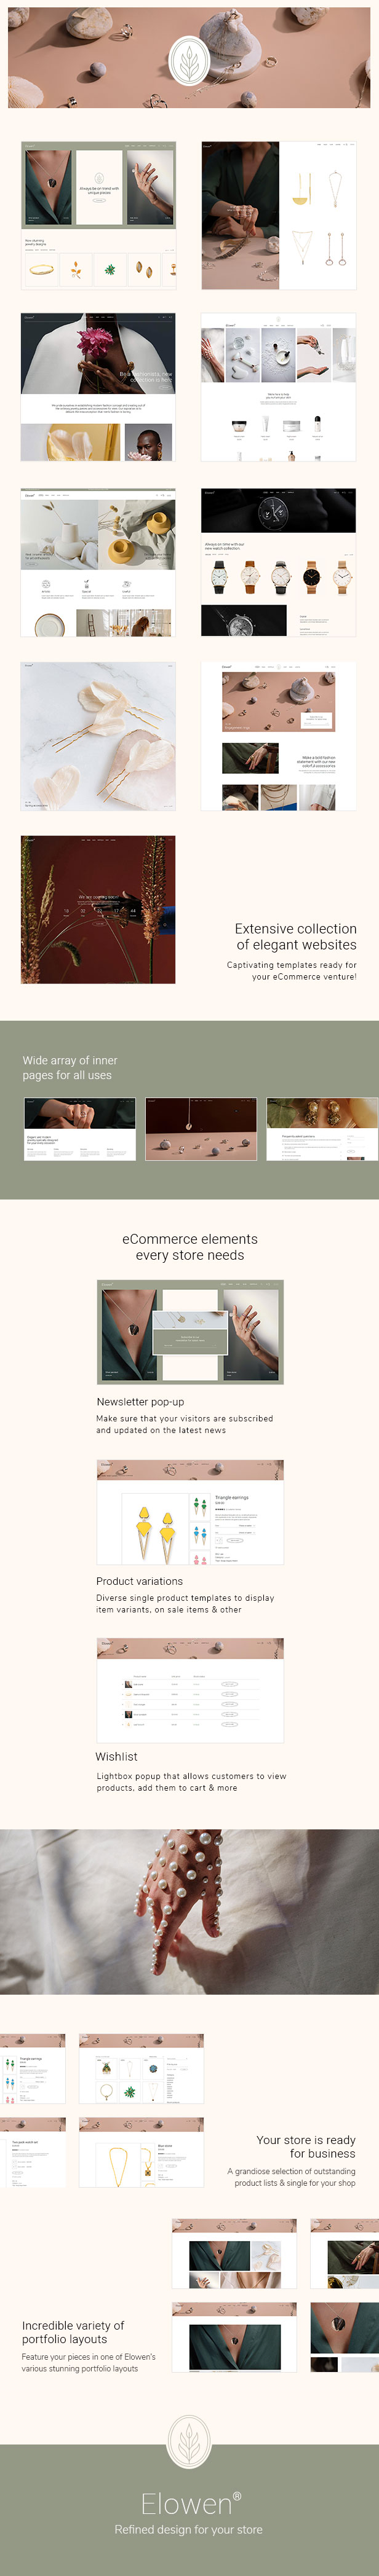 Elowen - Elegant eCommerce Theme - 2